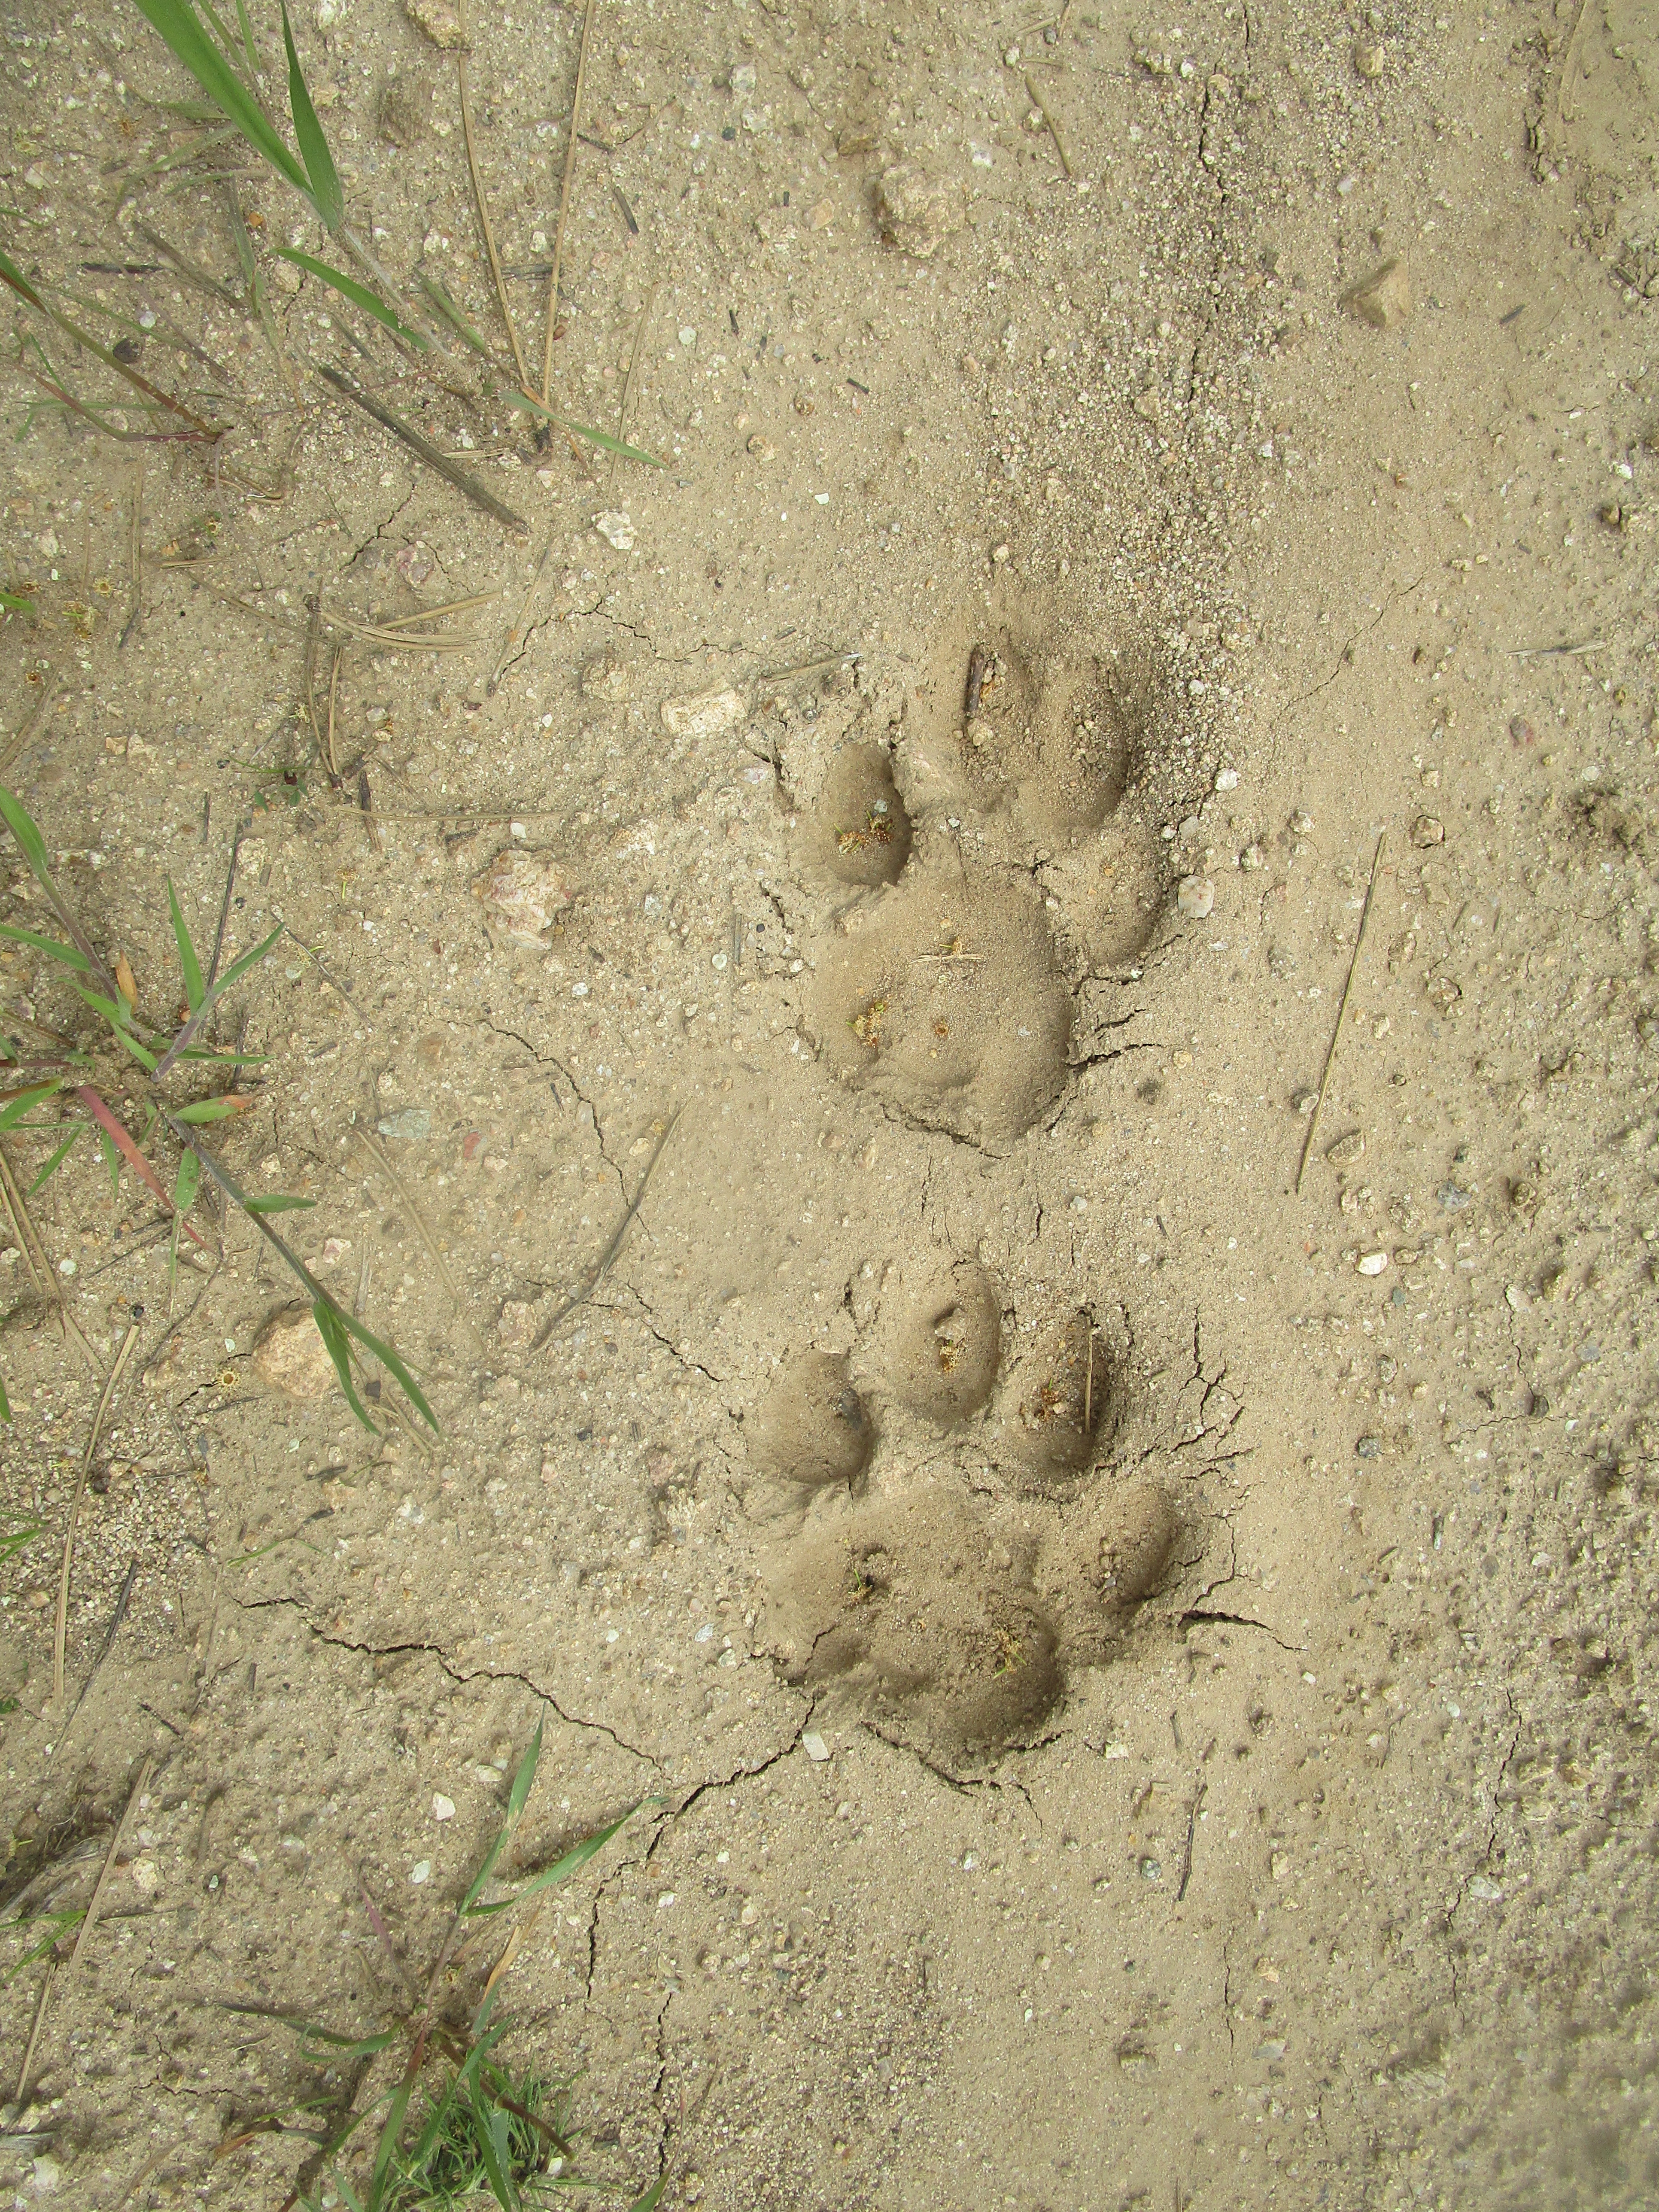 mountain lion paw prints